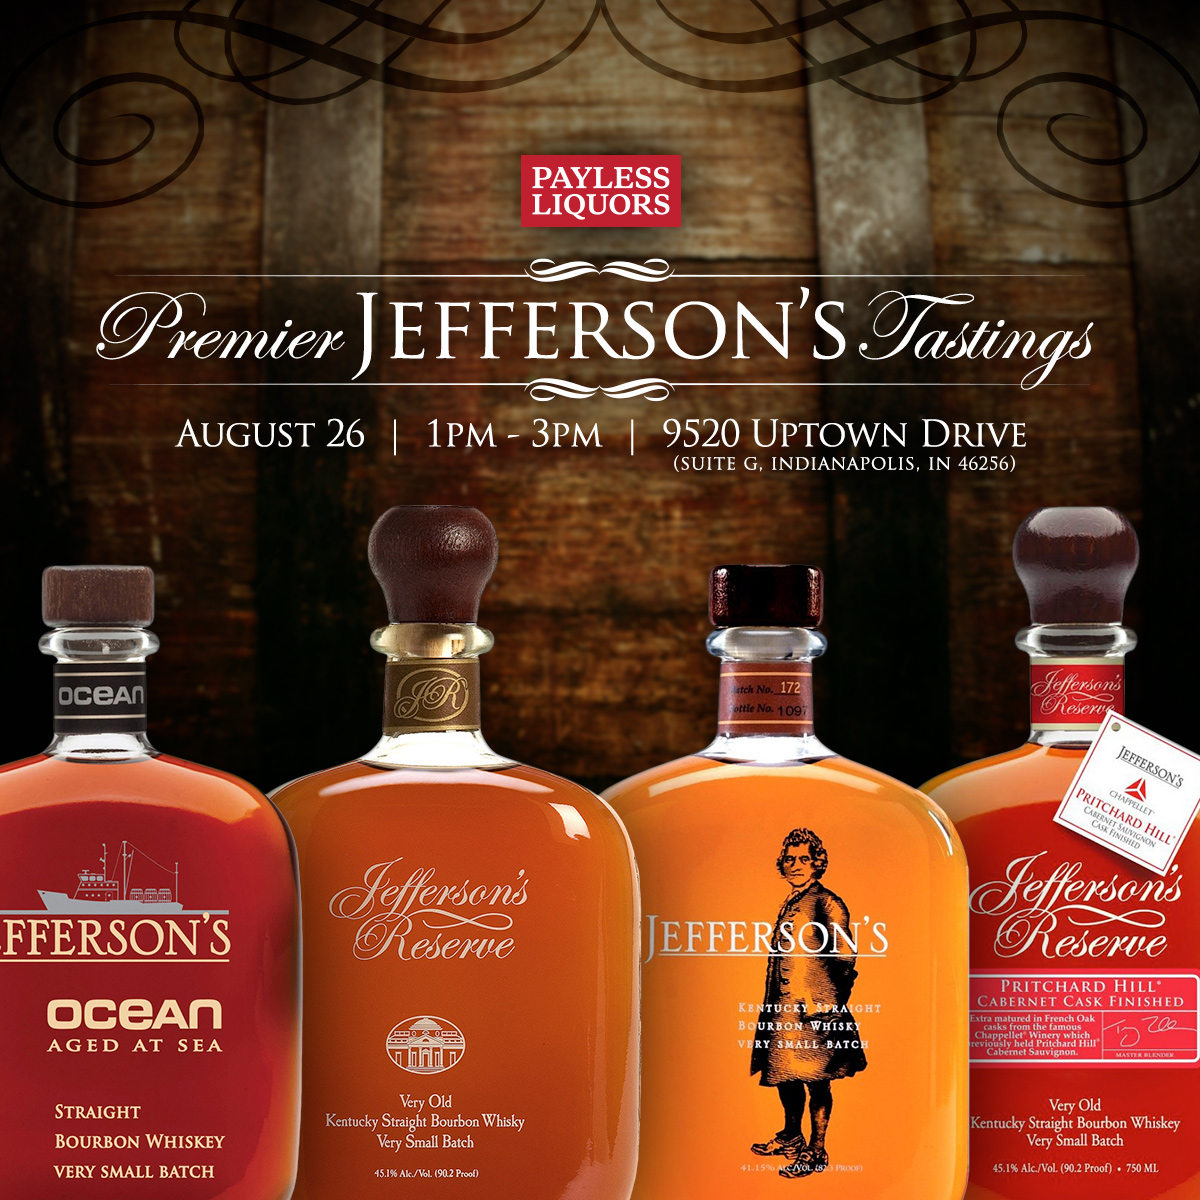 Jefferson's